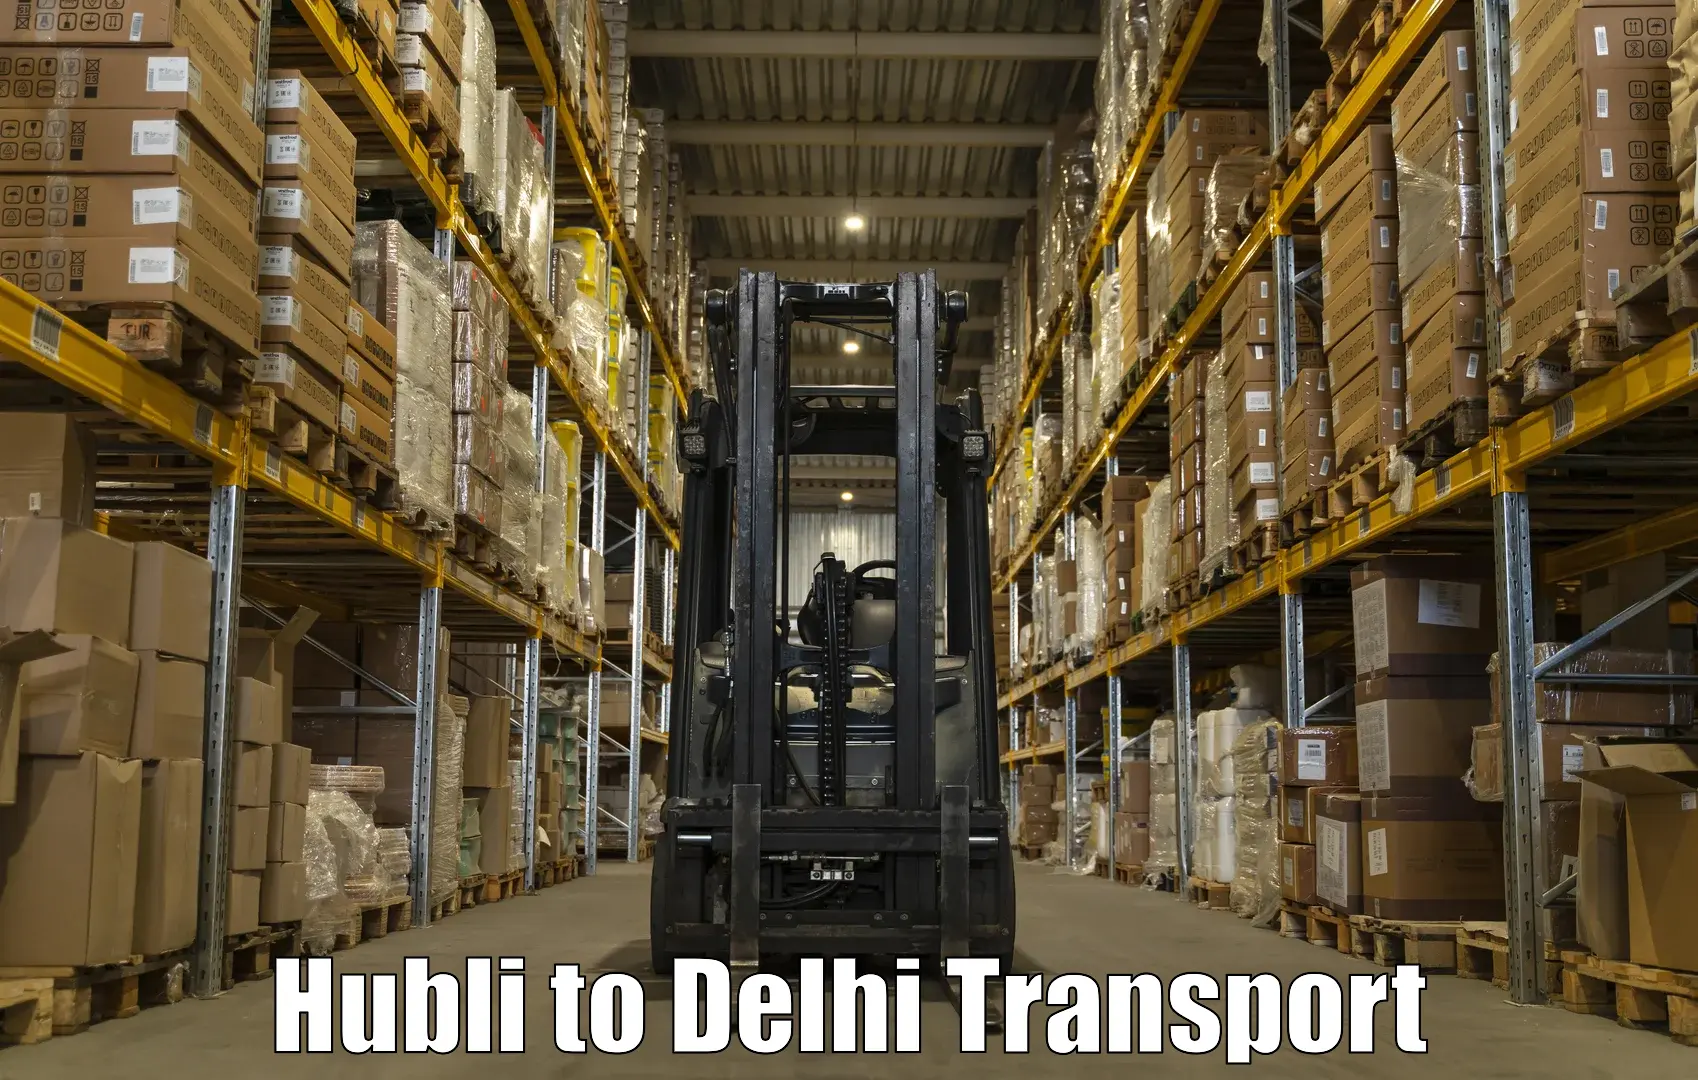 Commercial transport service Hubli to Delhi